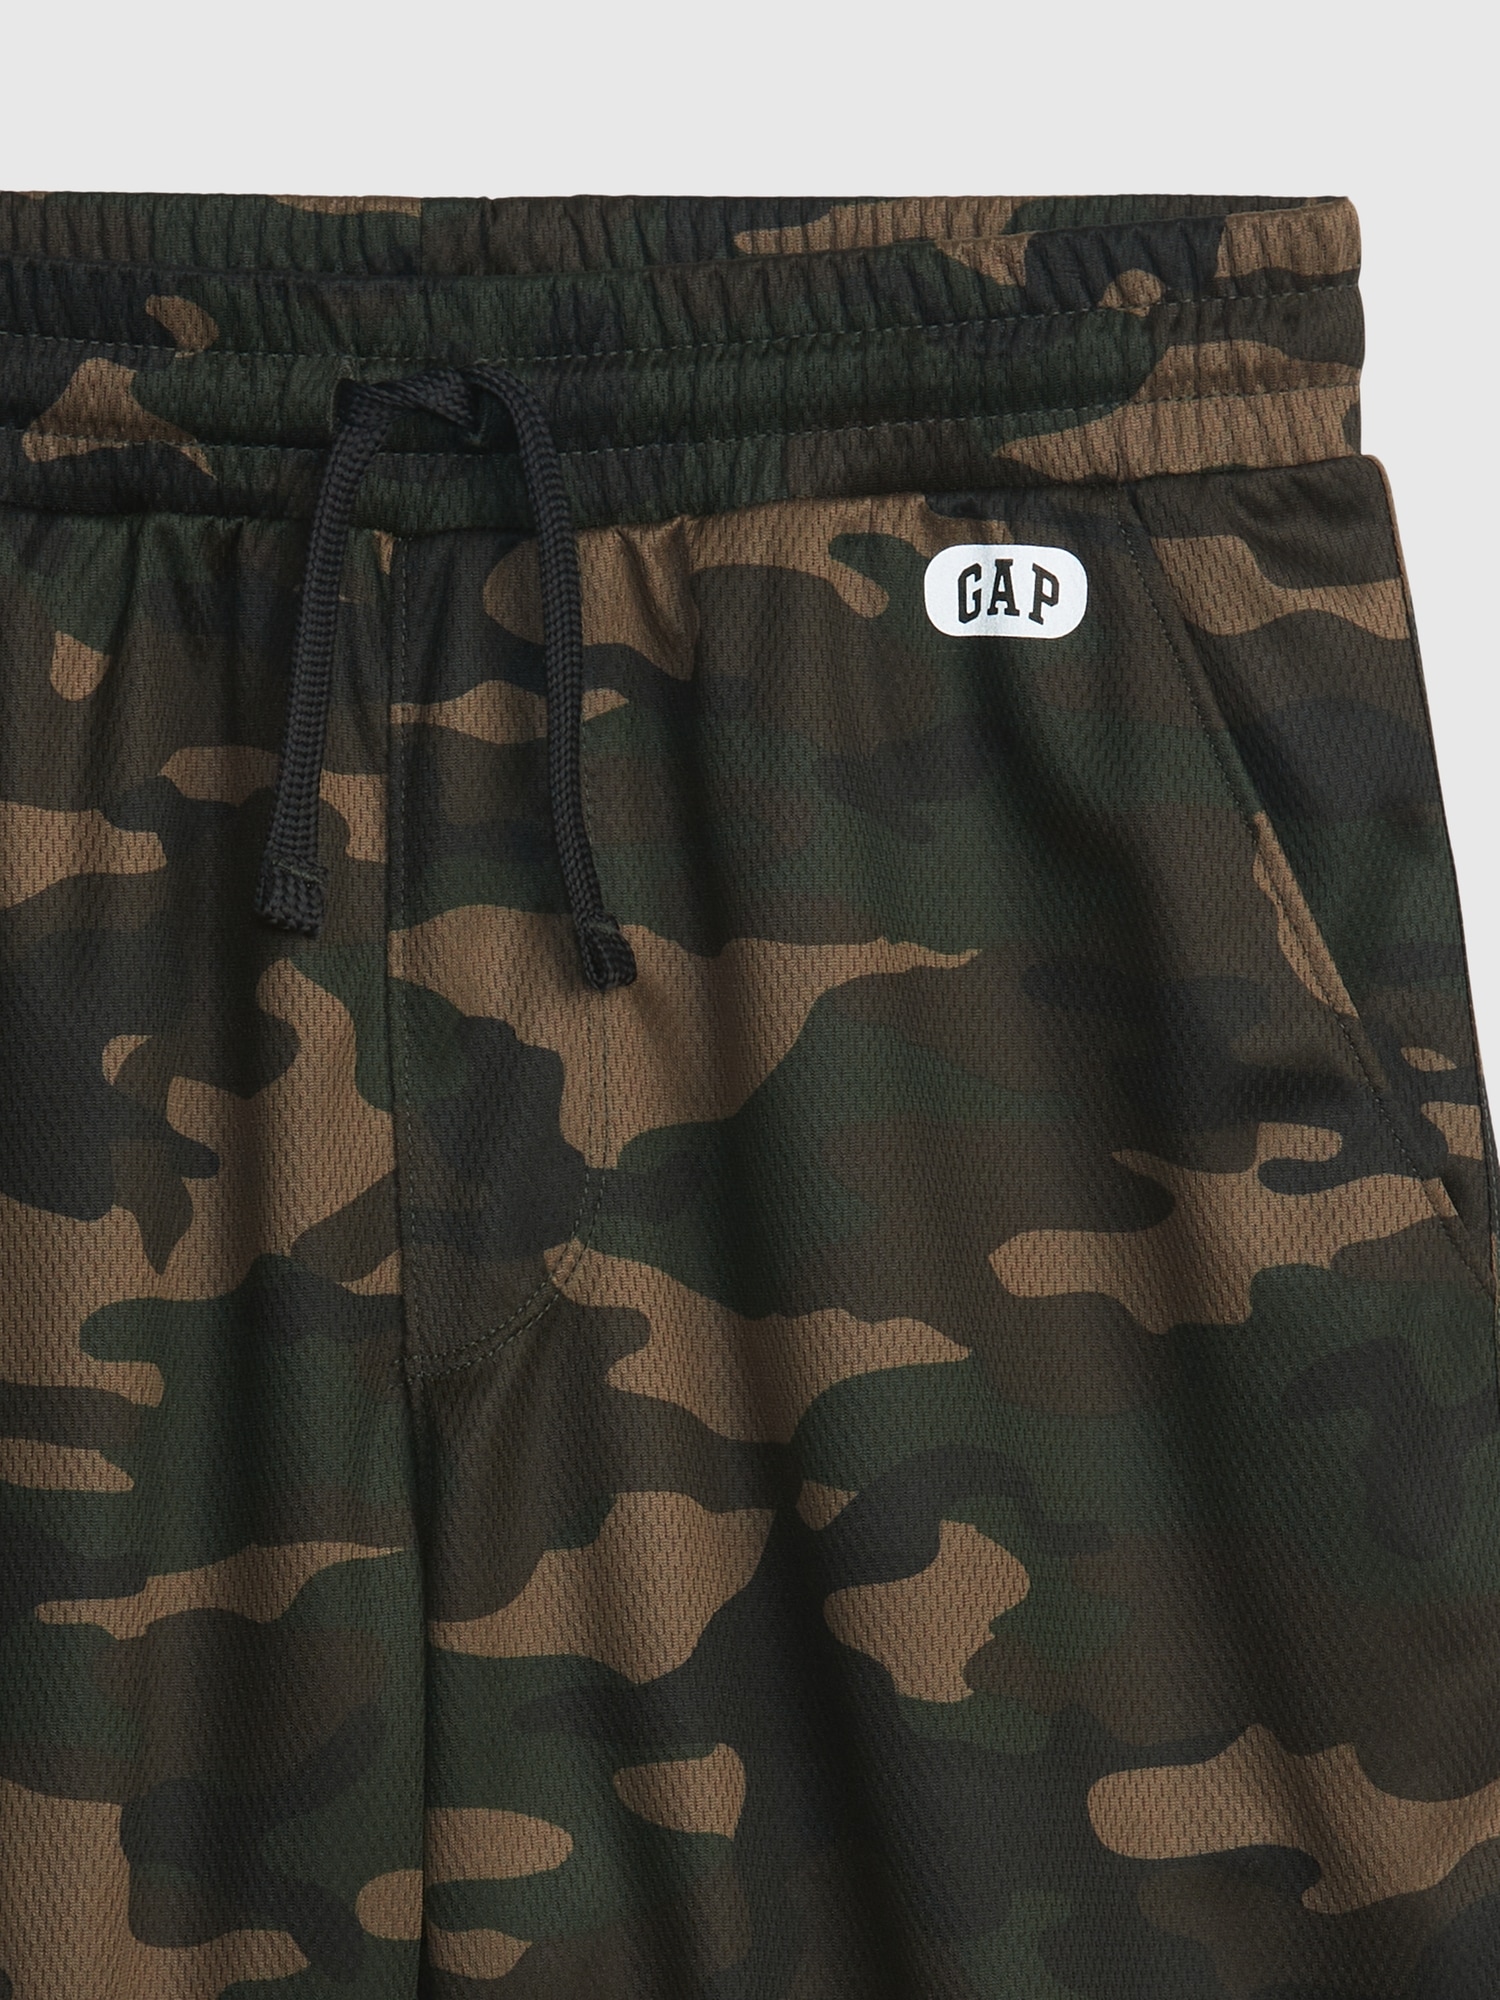 Gap shorts men: Stylish and Comfortable缩略图